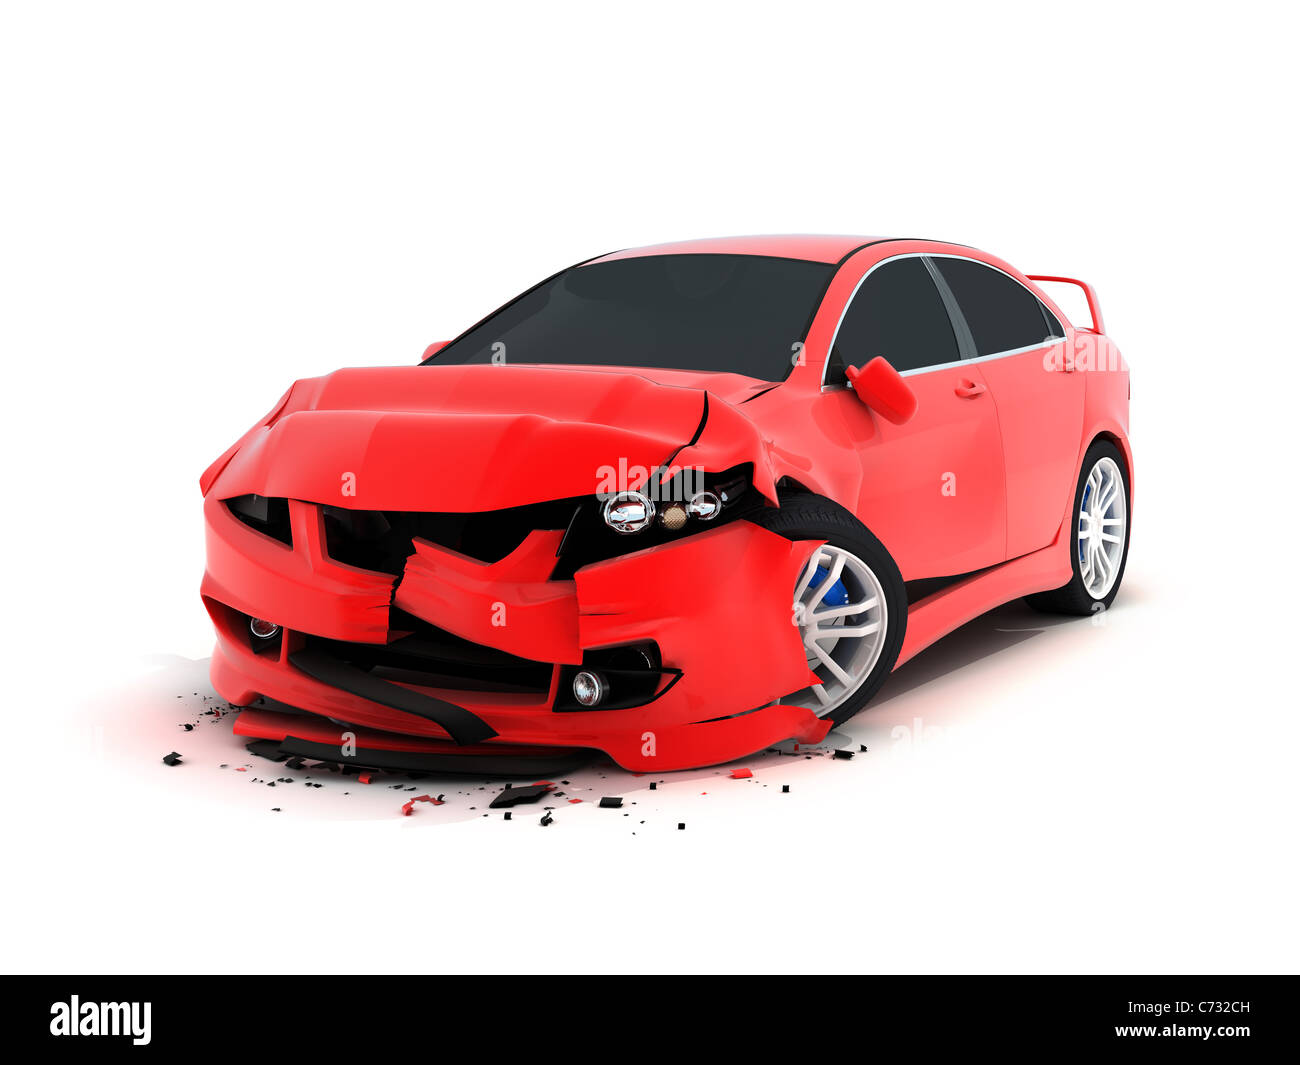 Car Crash White Background Images – Browse 15,155 Stock Photos